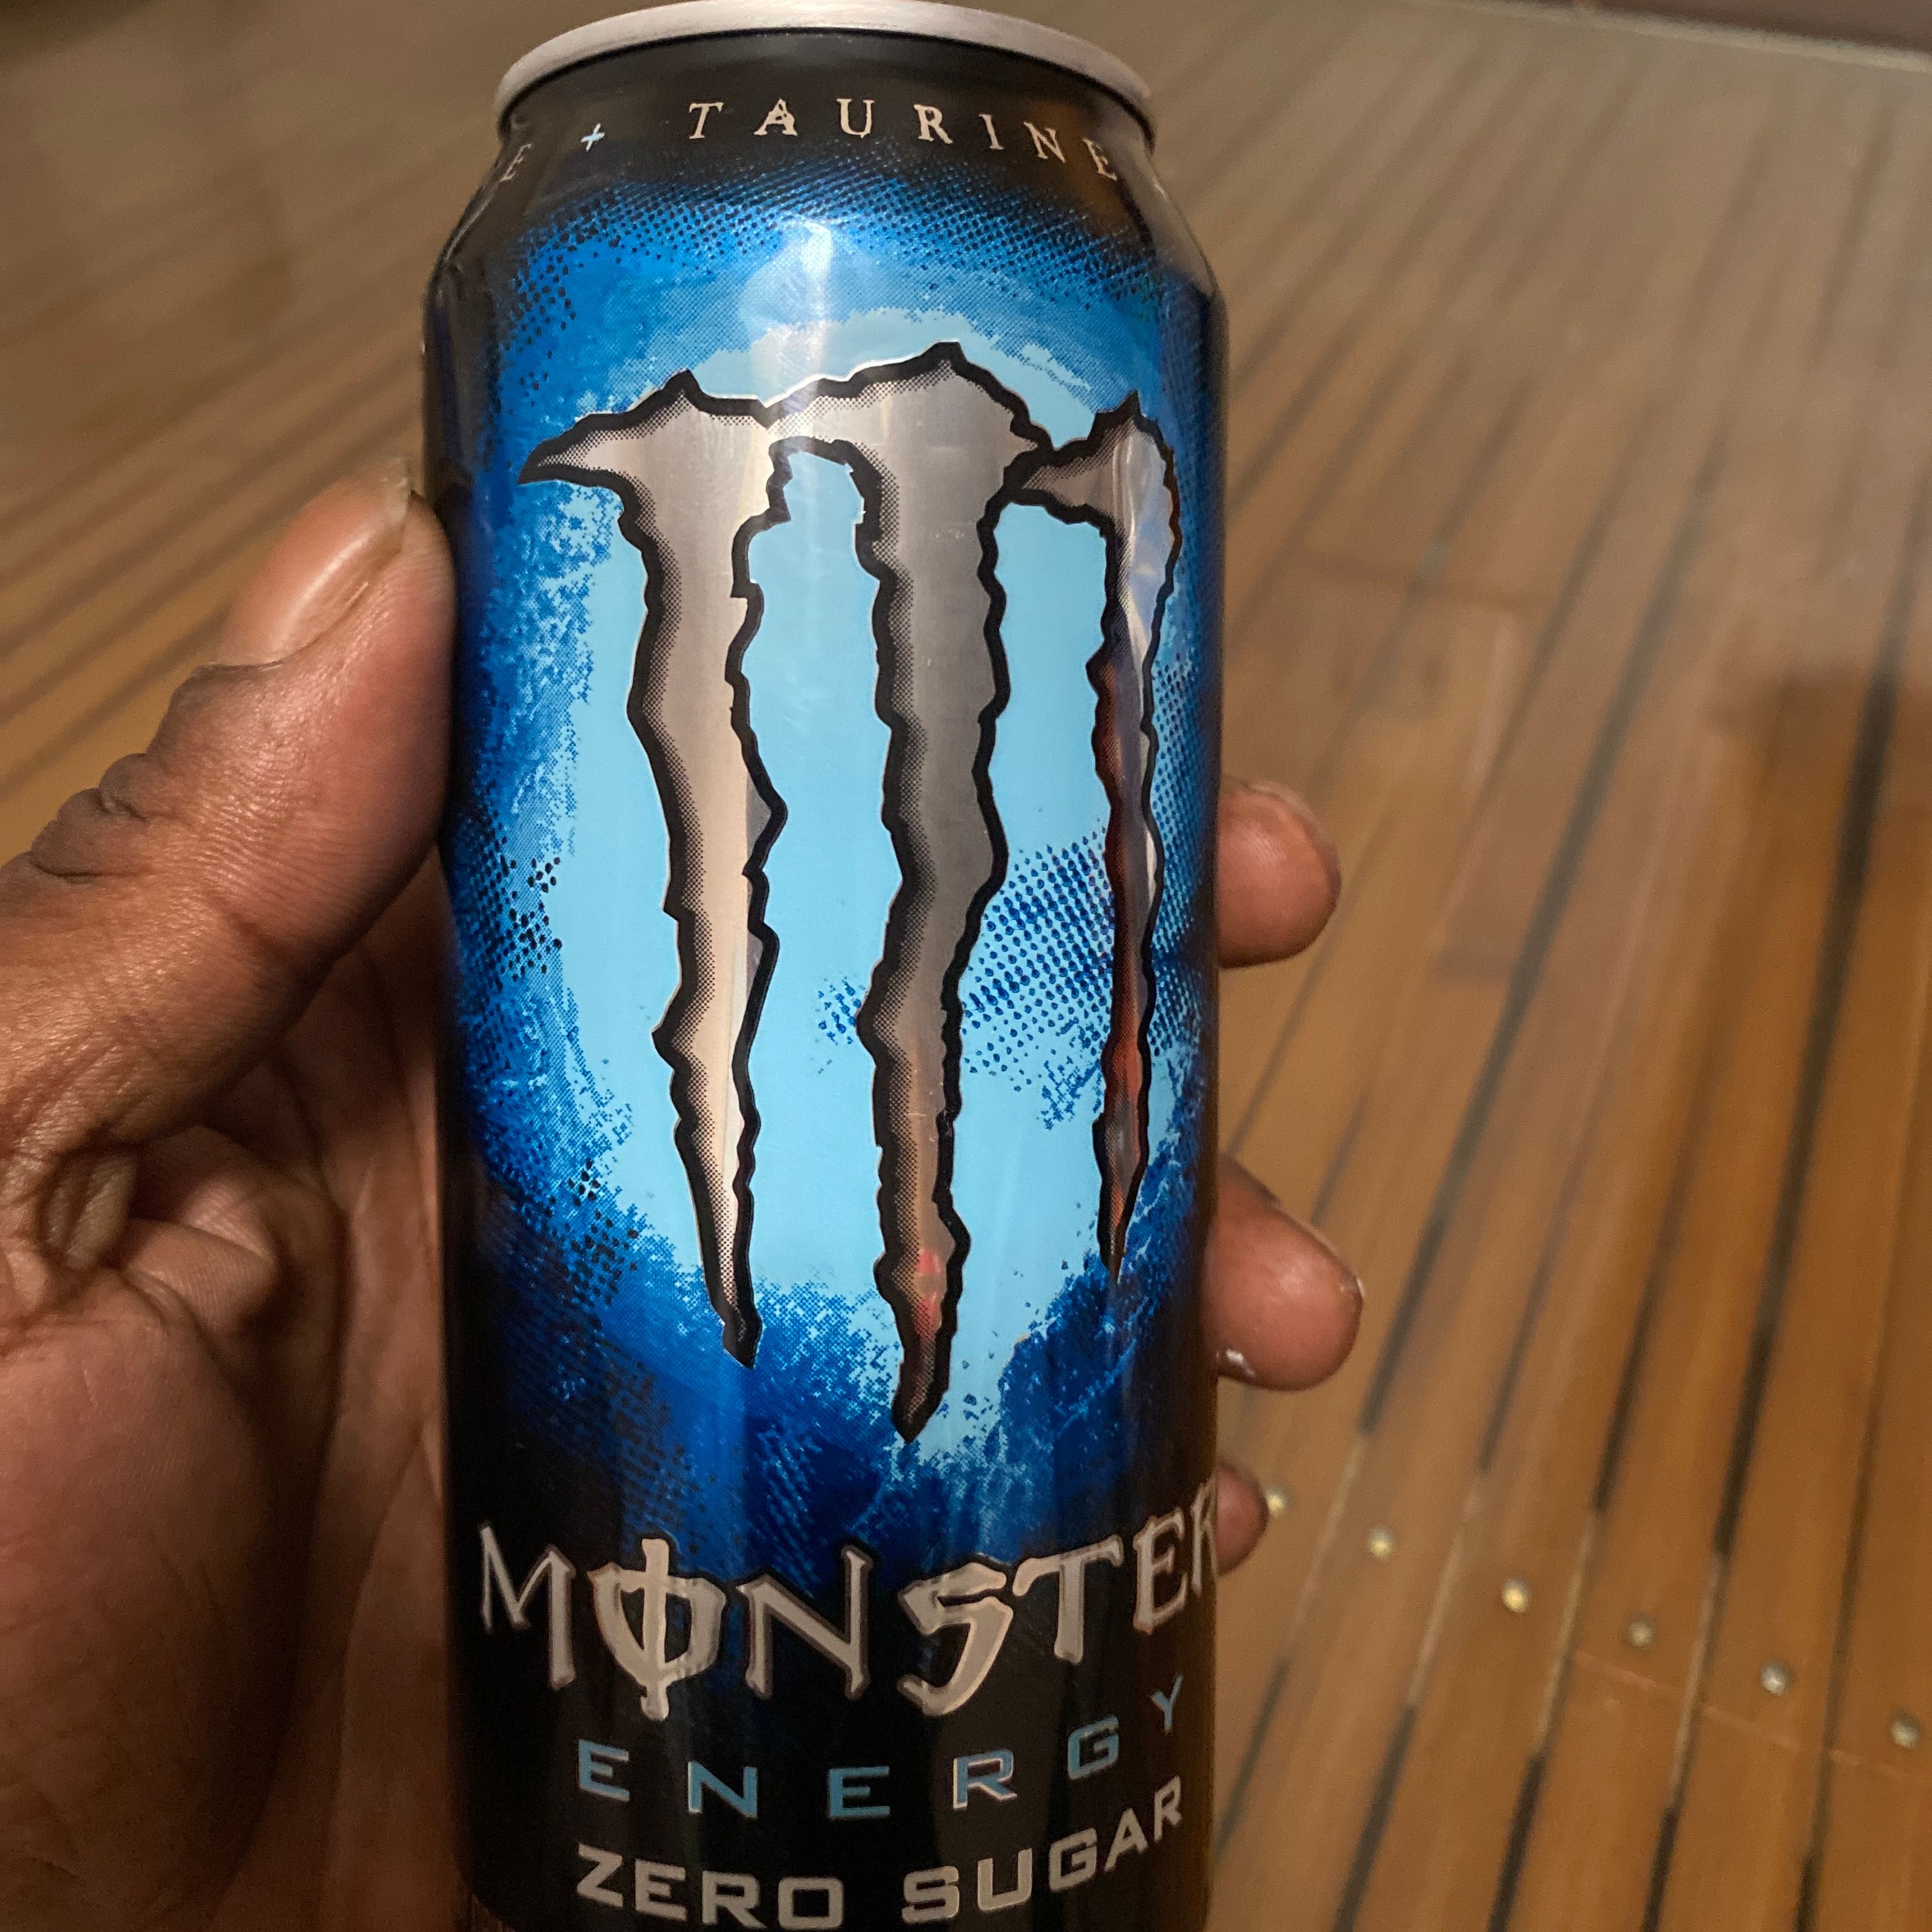 Monster energy zero sugar